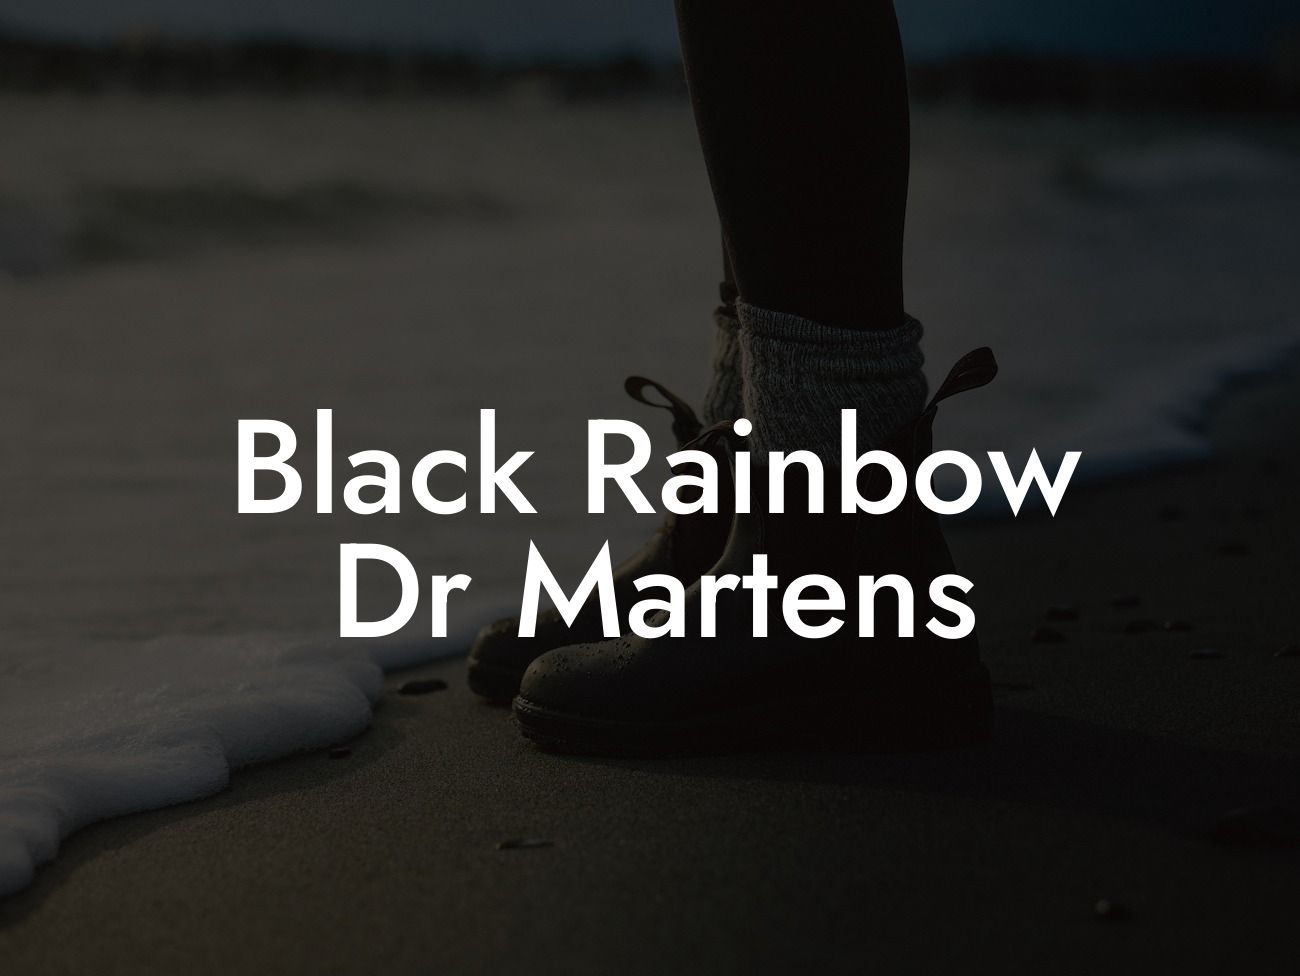 Black Rainbow Dr Martens